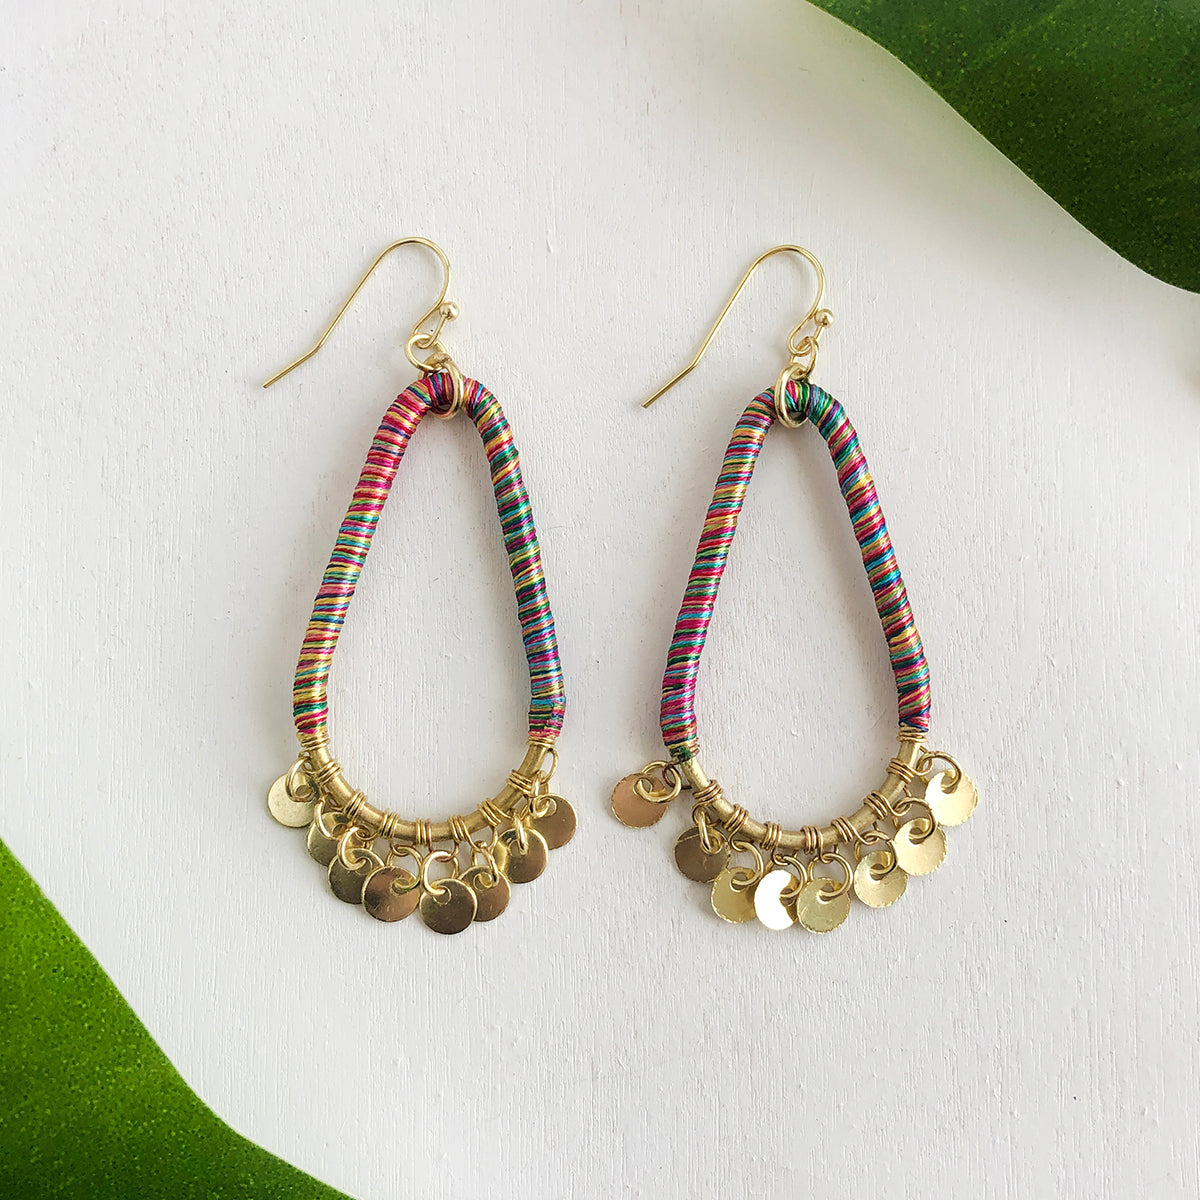 Angelco Accessories Rainbow charm teardrop earrings